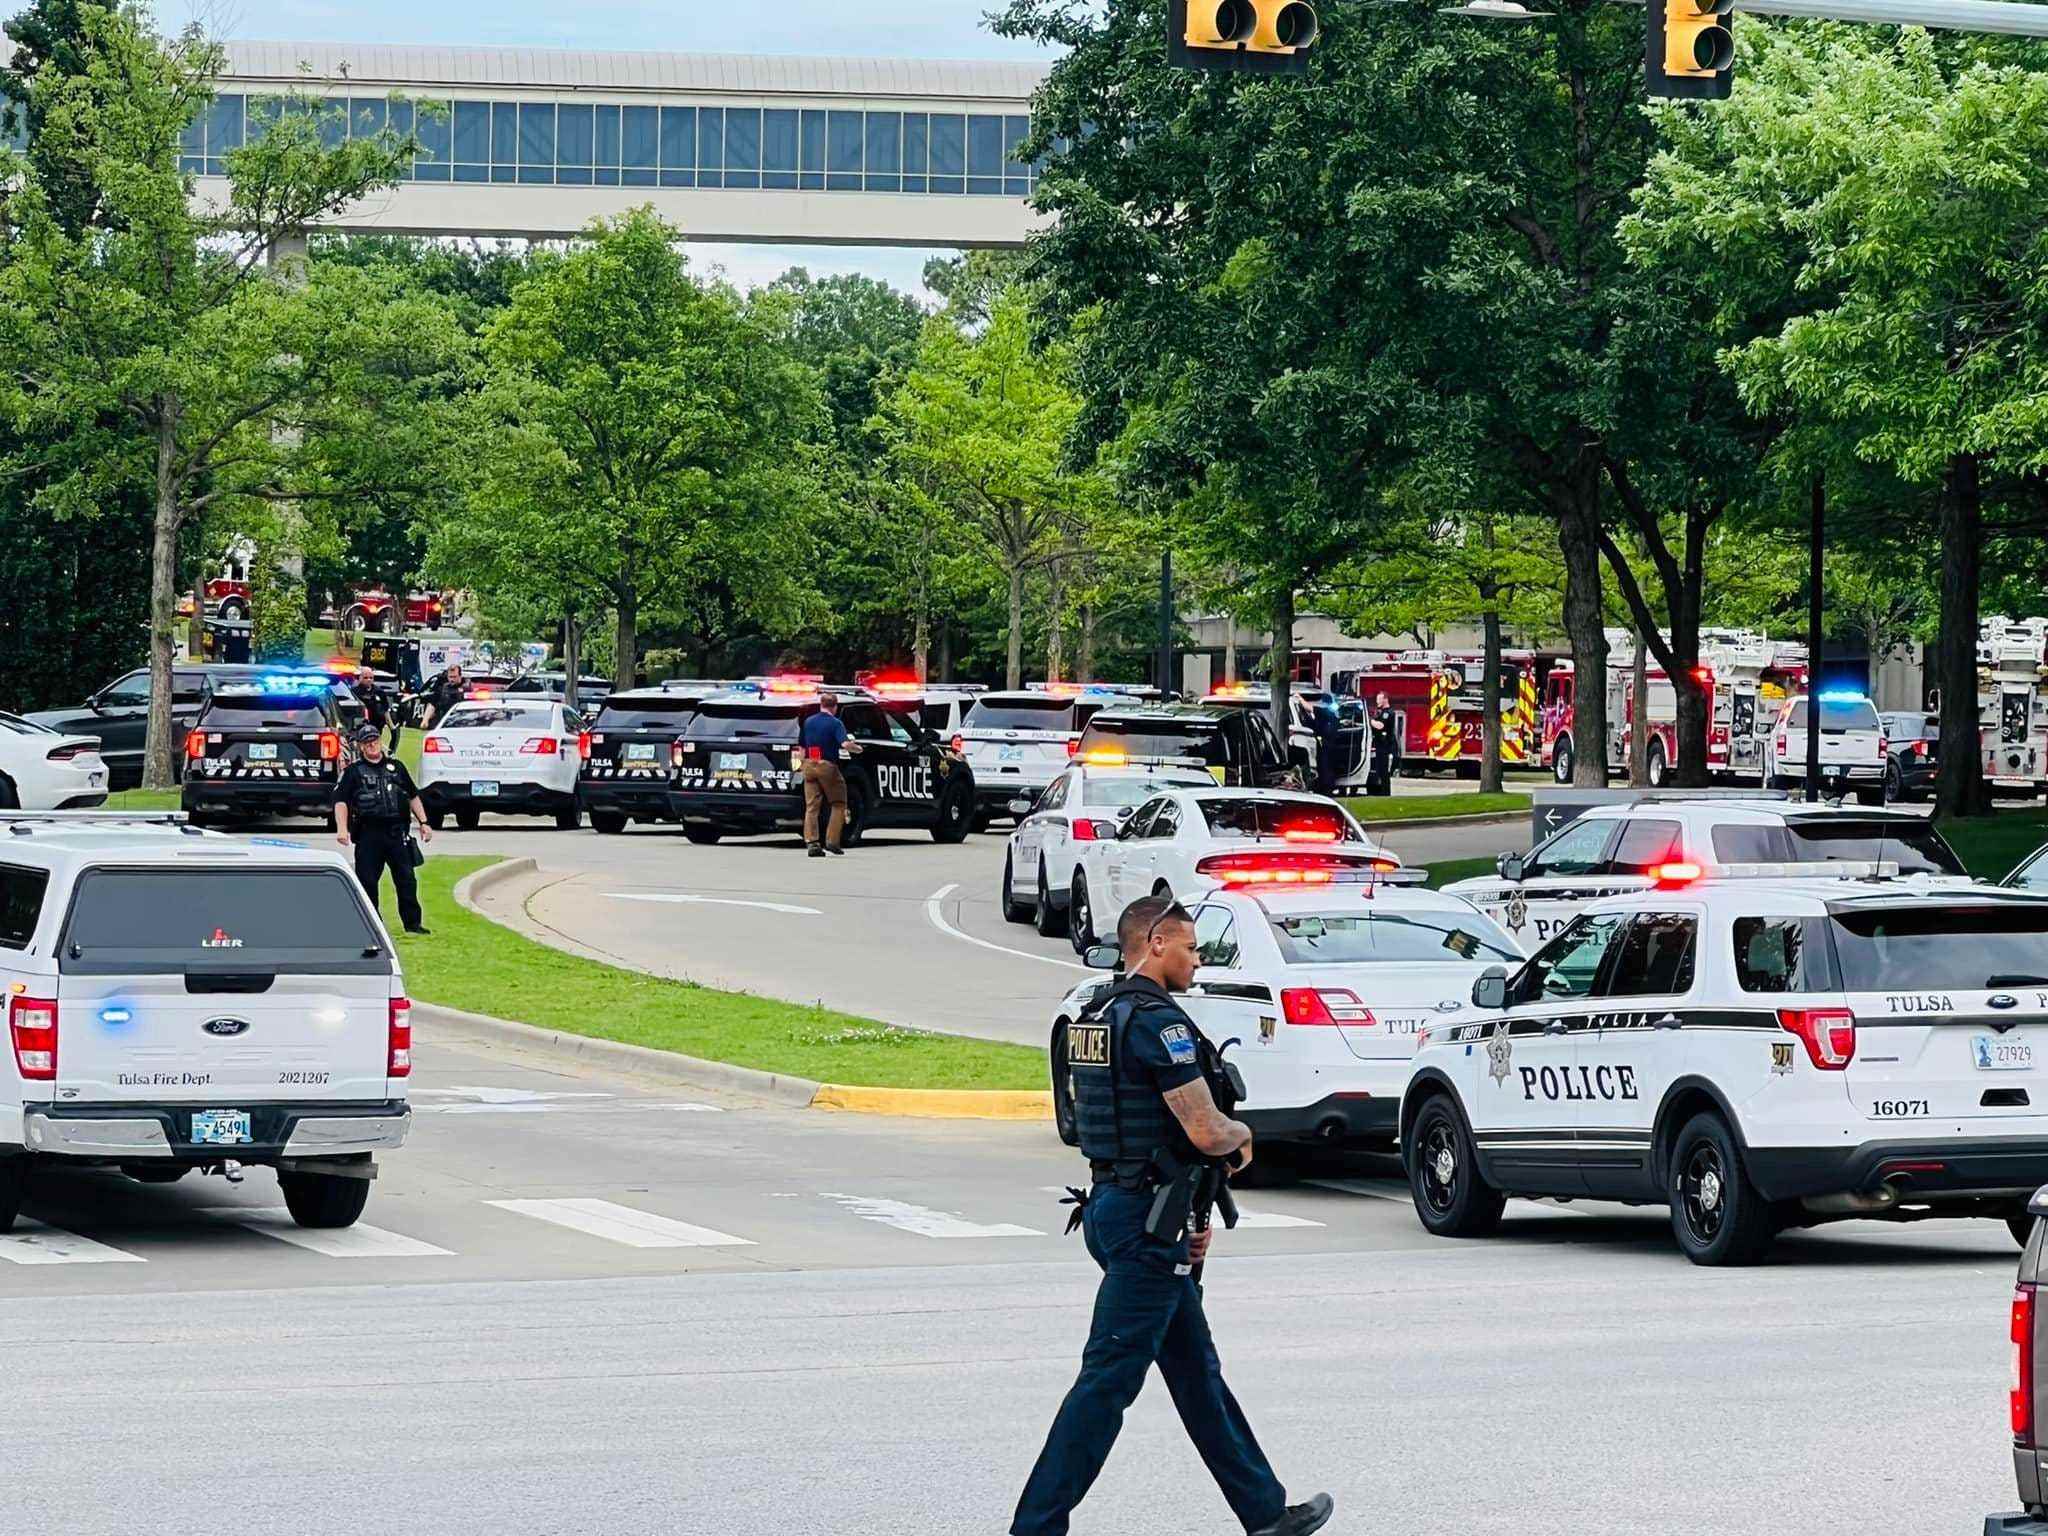 Mehrere Polizeiautos parken vor dem St. Francis Hospital in Tulsa, Oklahoma.